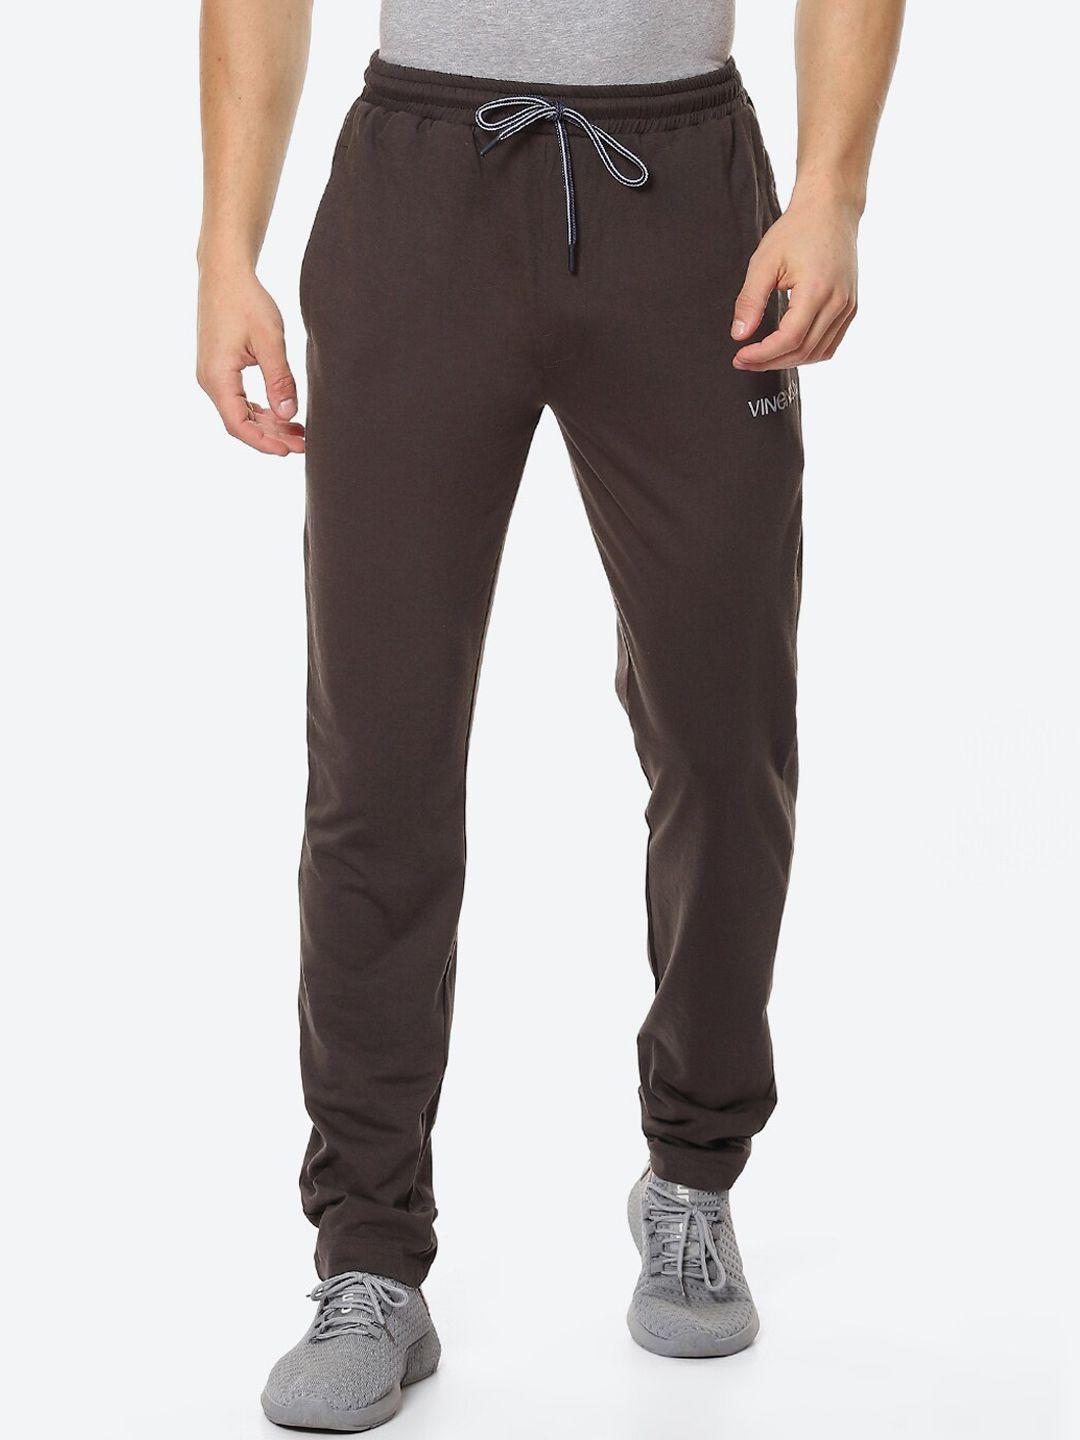 vinenzia-men-brown-solid-track-pants